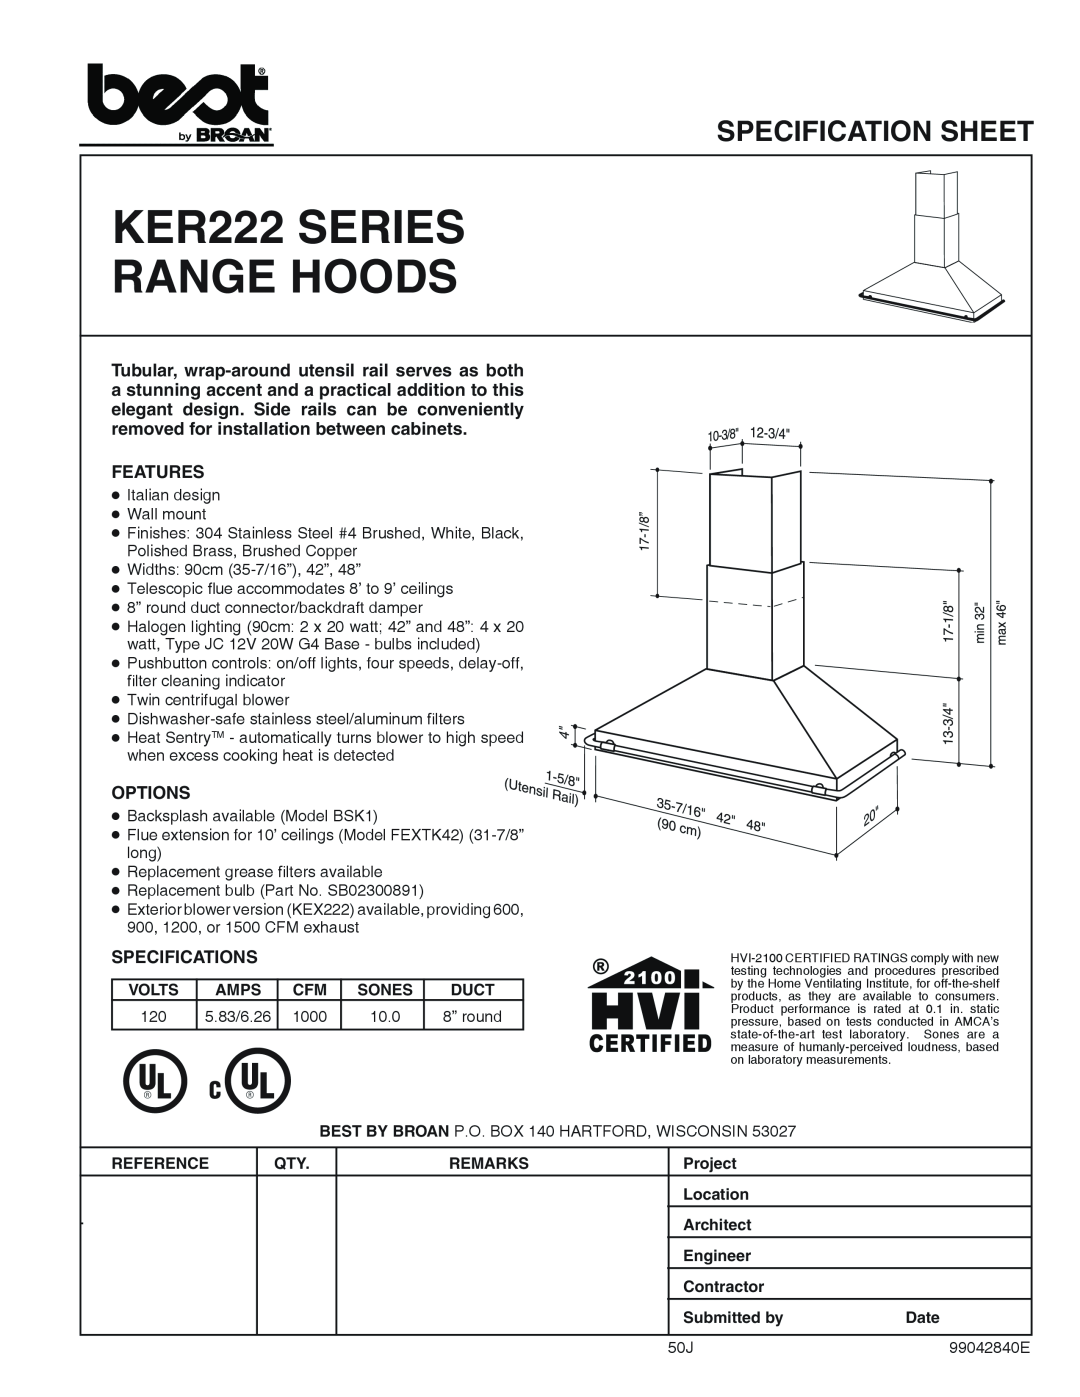 Best KER222 specifications Ker222 SERIES RANGE HOODS, Specification Sheet, Features, Options, Specifications 